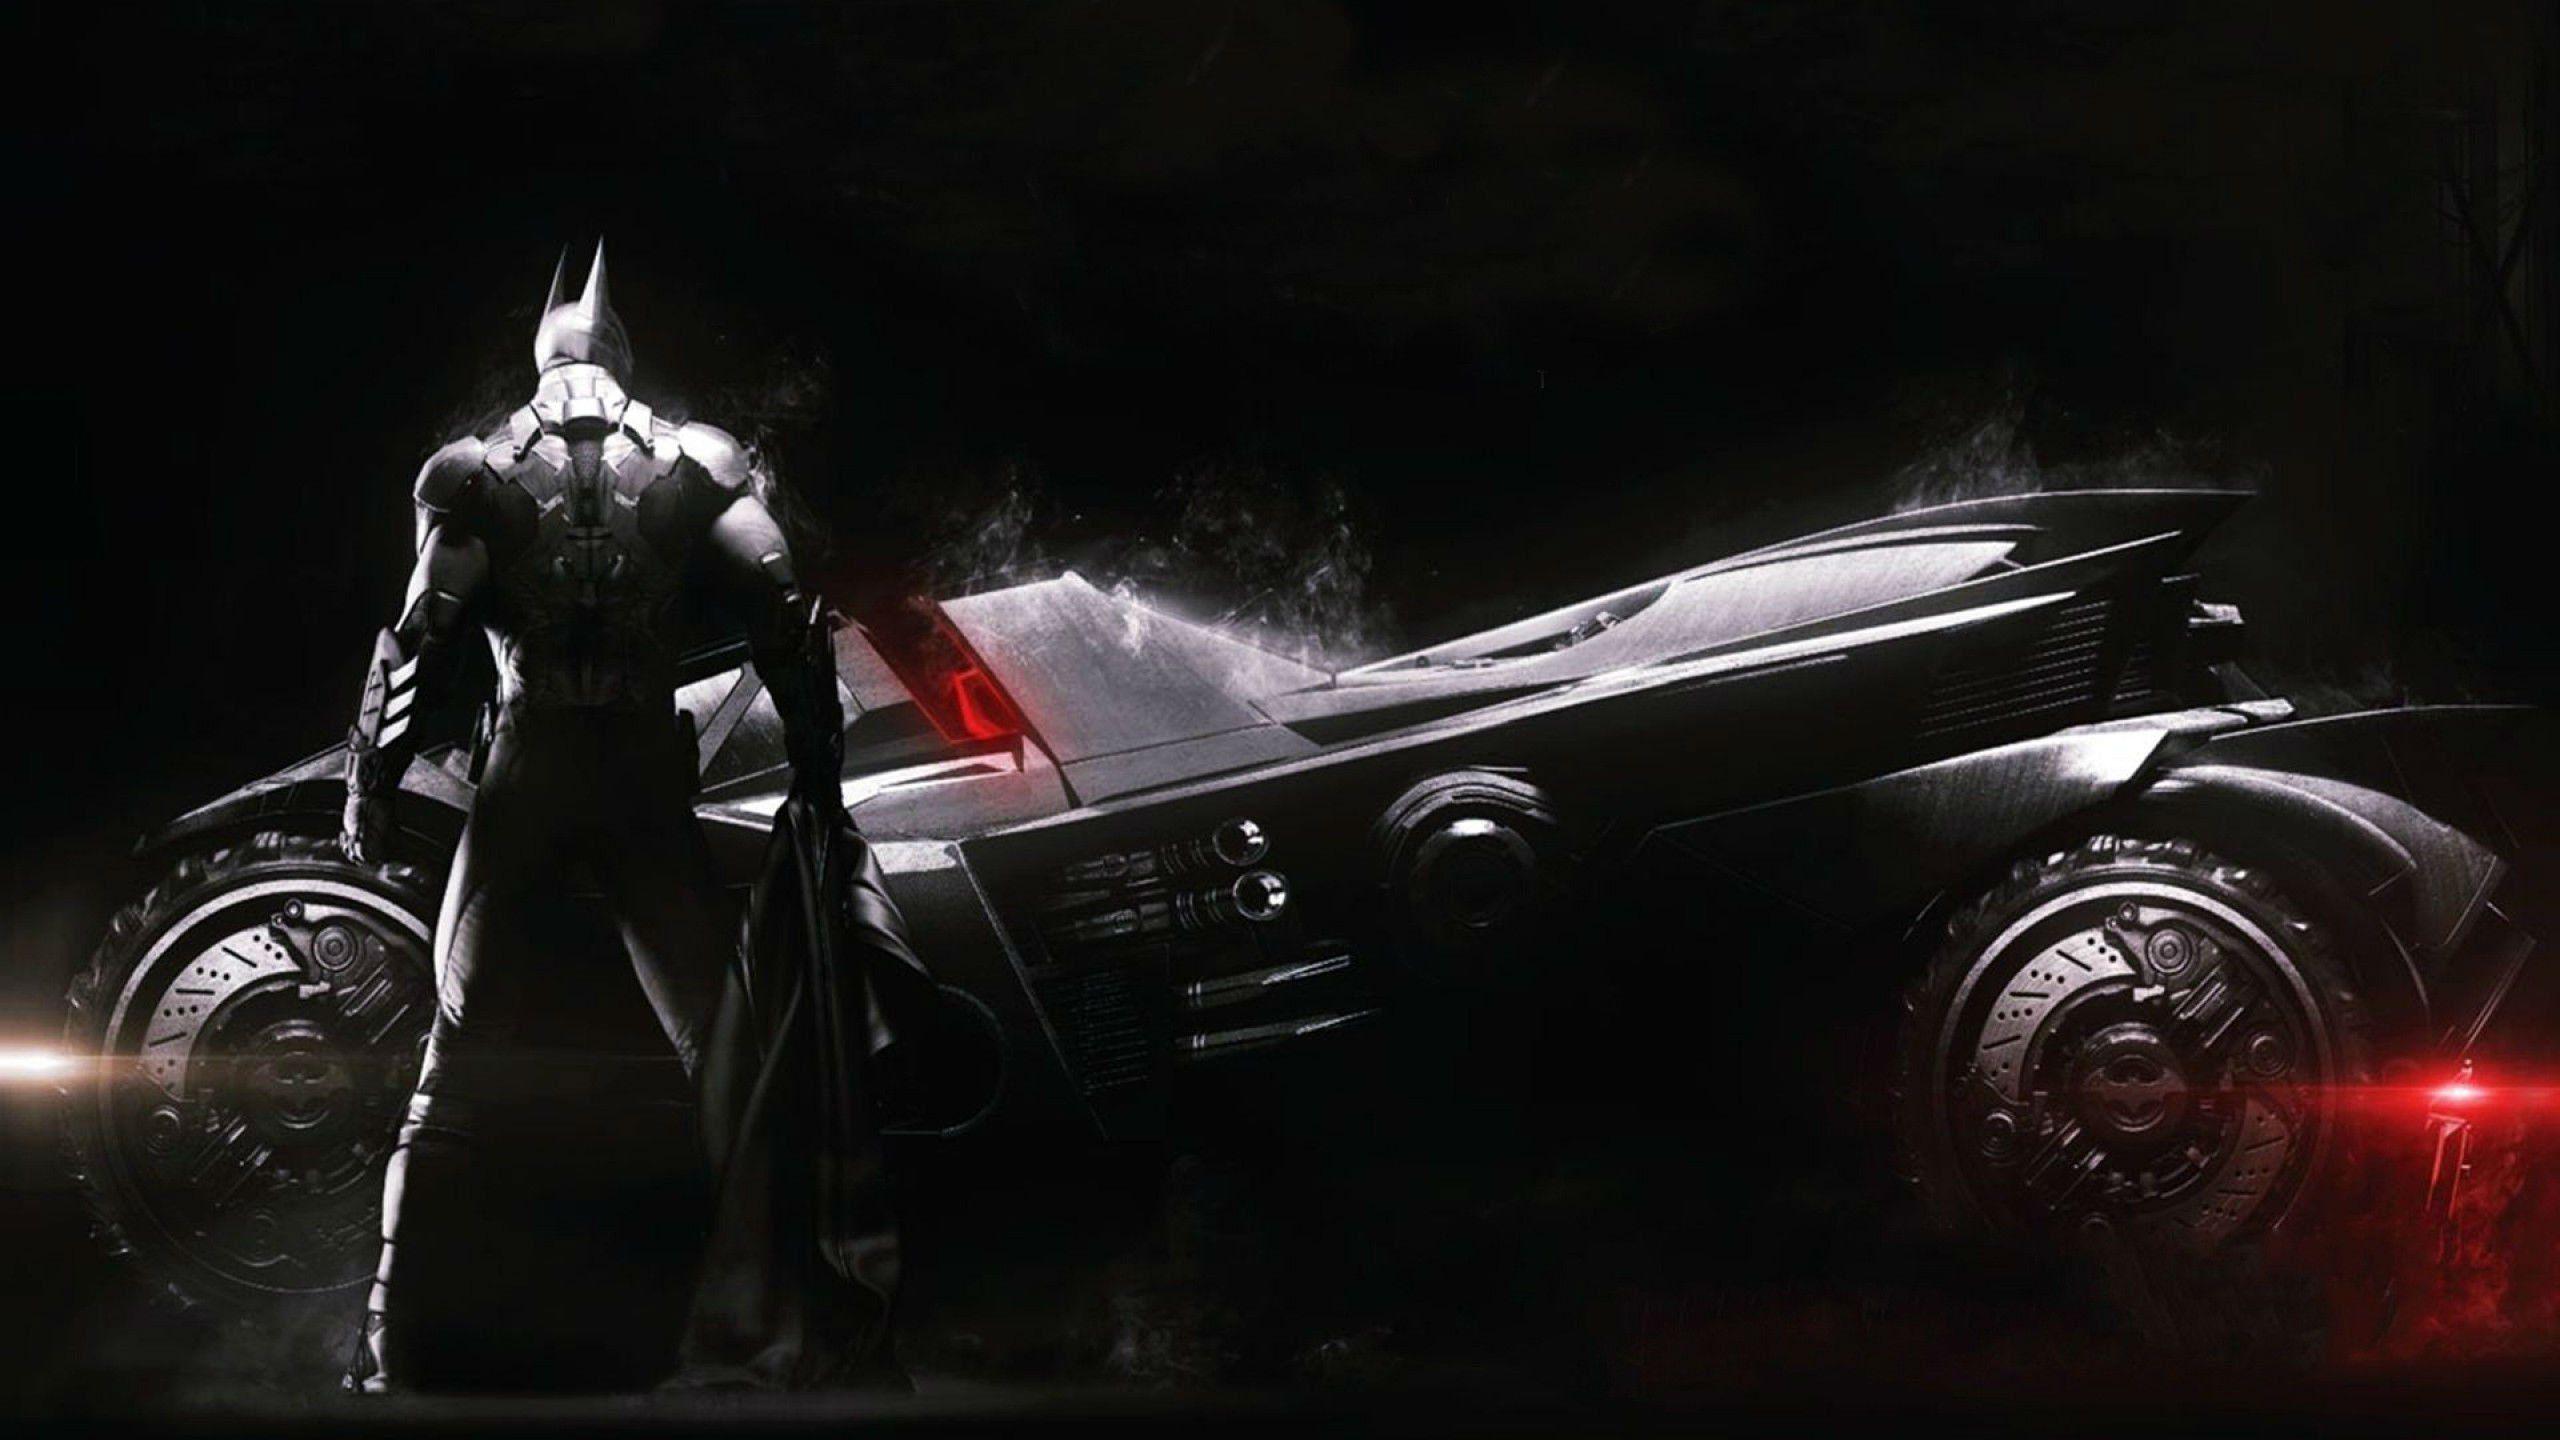 Batman Arkham Knight Image. wallpaper.wiki